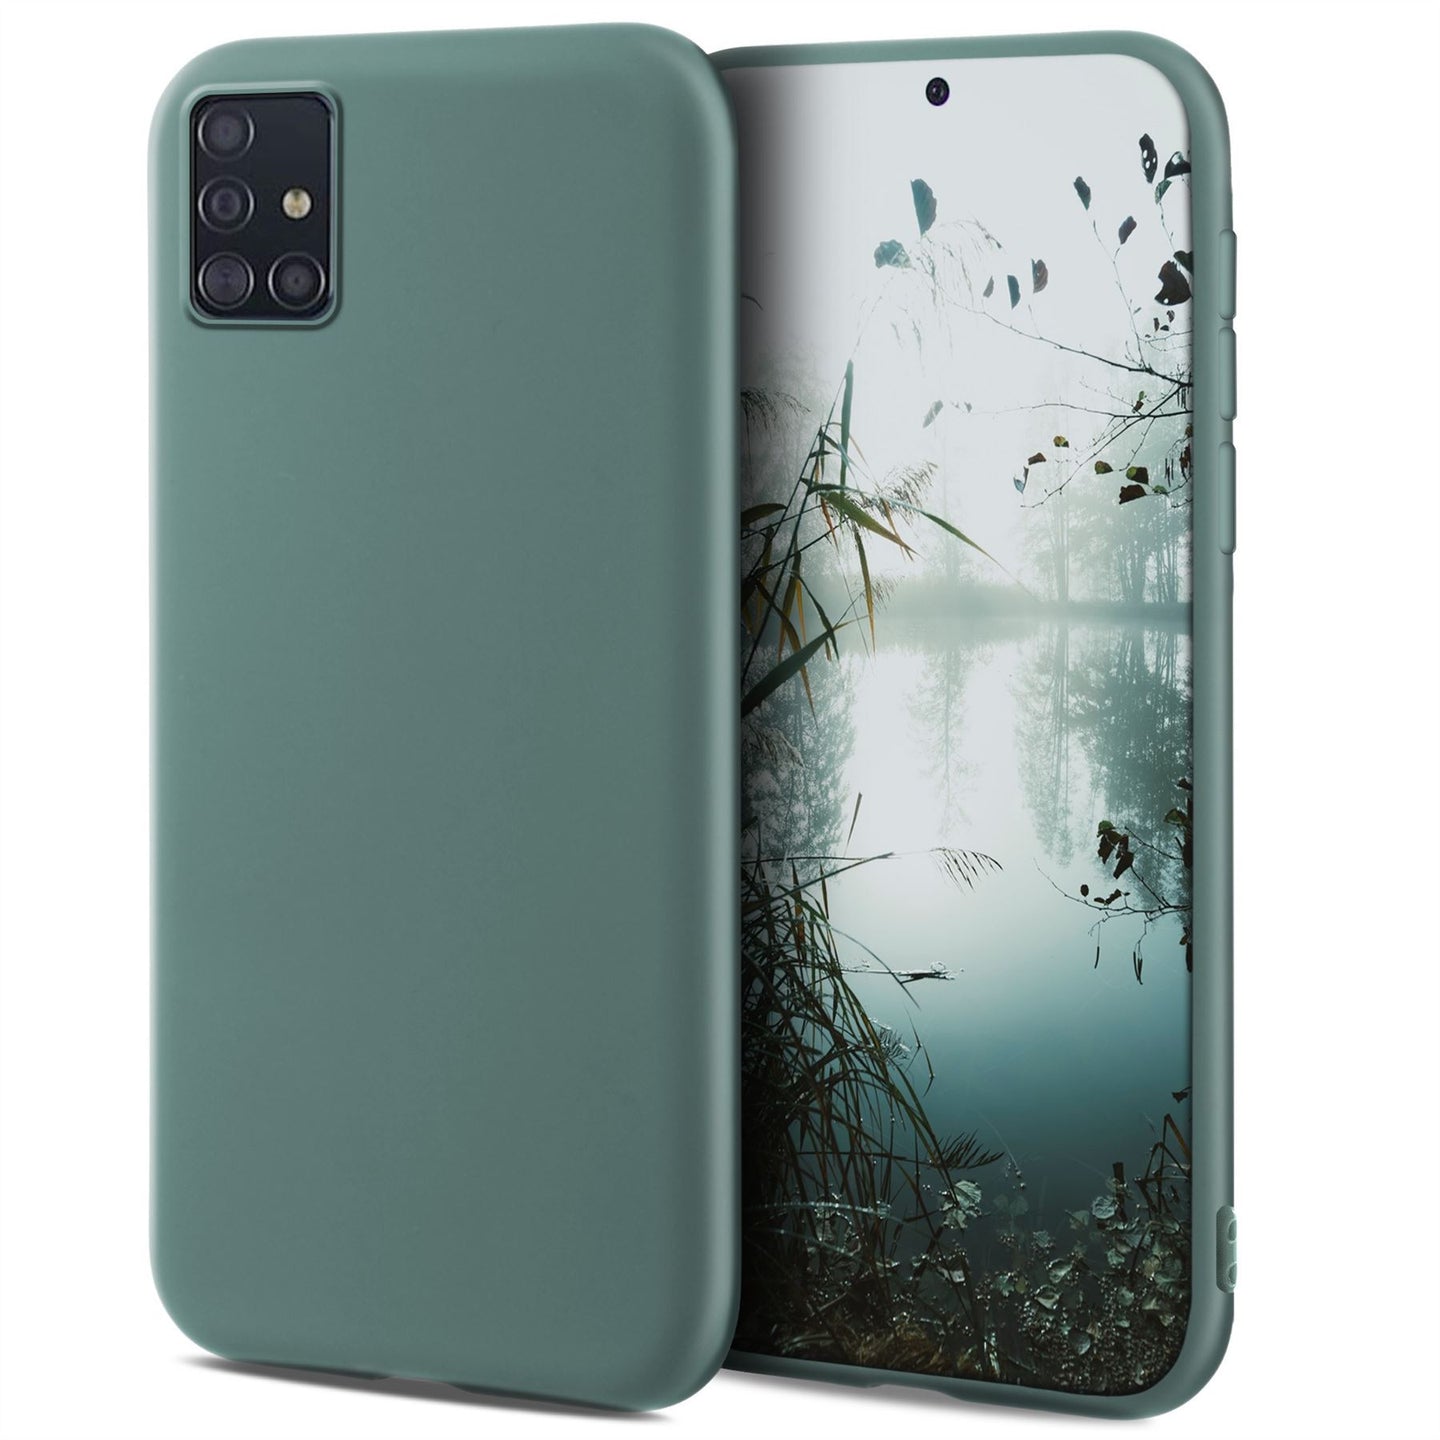 Moozy Minimalist Series Silicone Case for Samsung A71, Blue Grey - Matte Finish Slim Soft TPU Cover